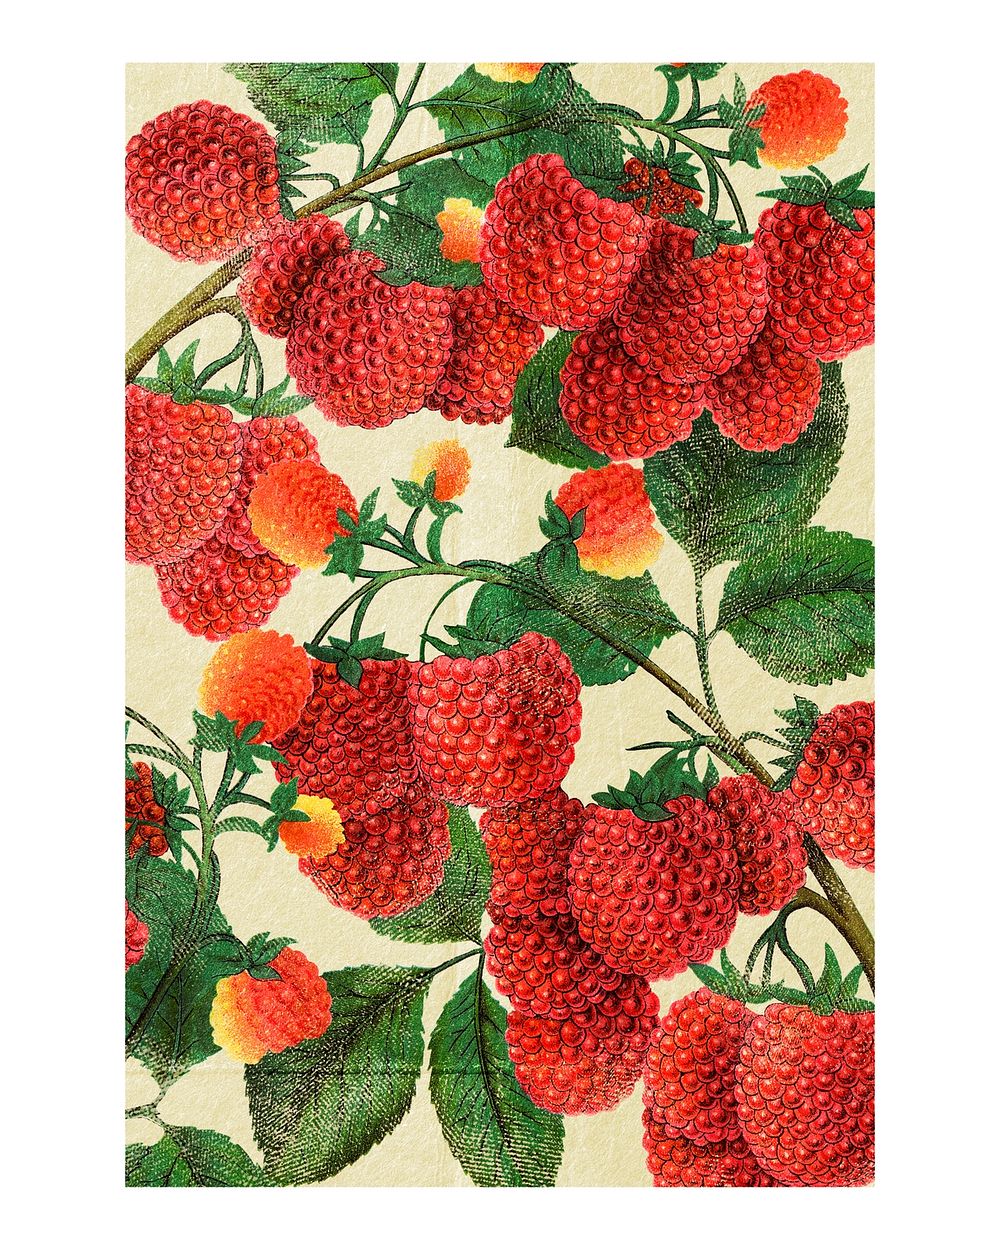 Raspberry bush art print, vintage botanical artwork